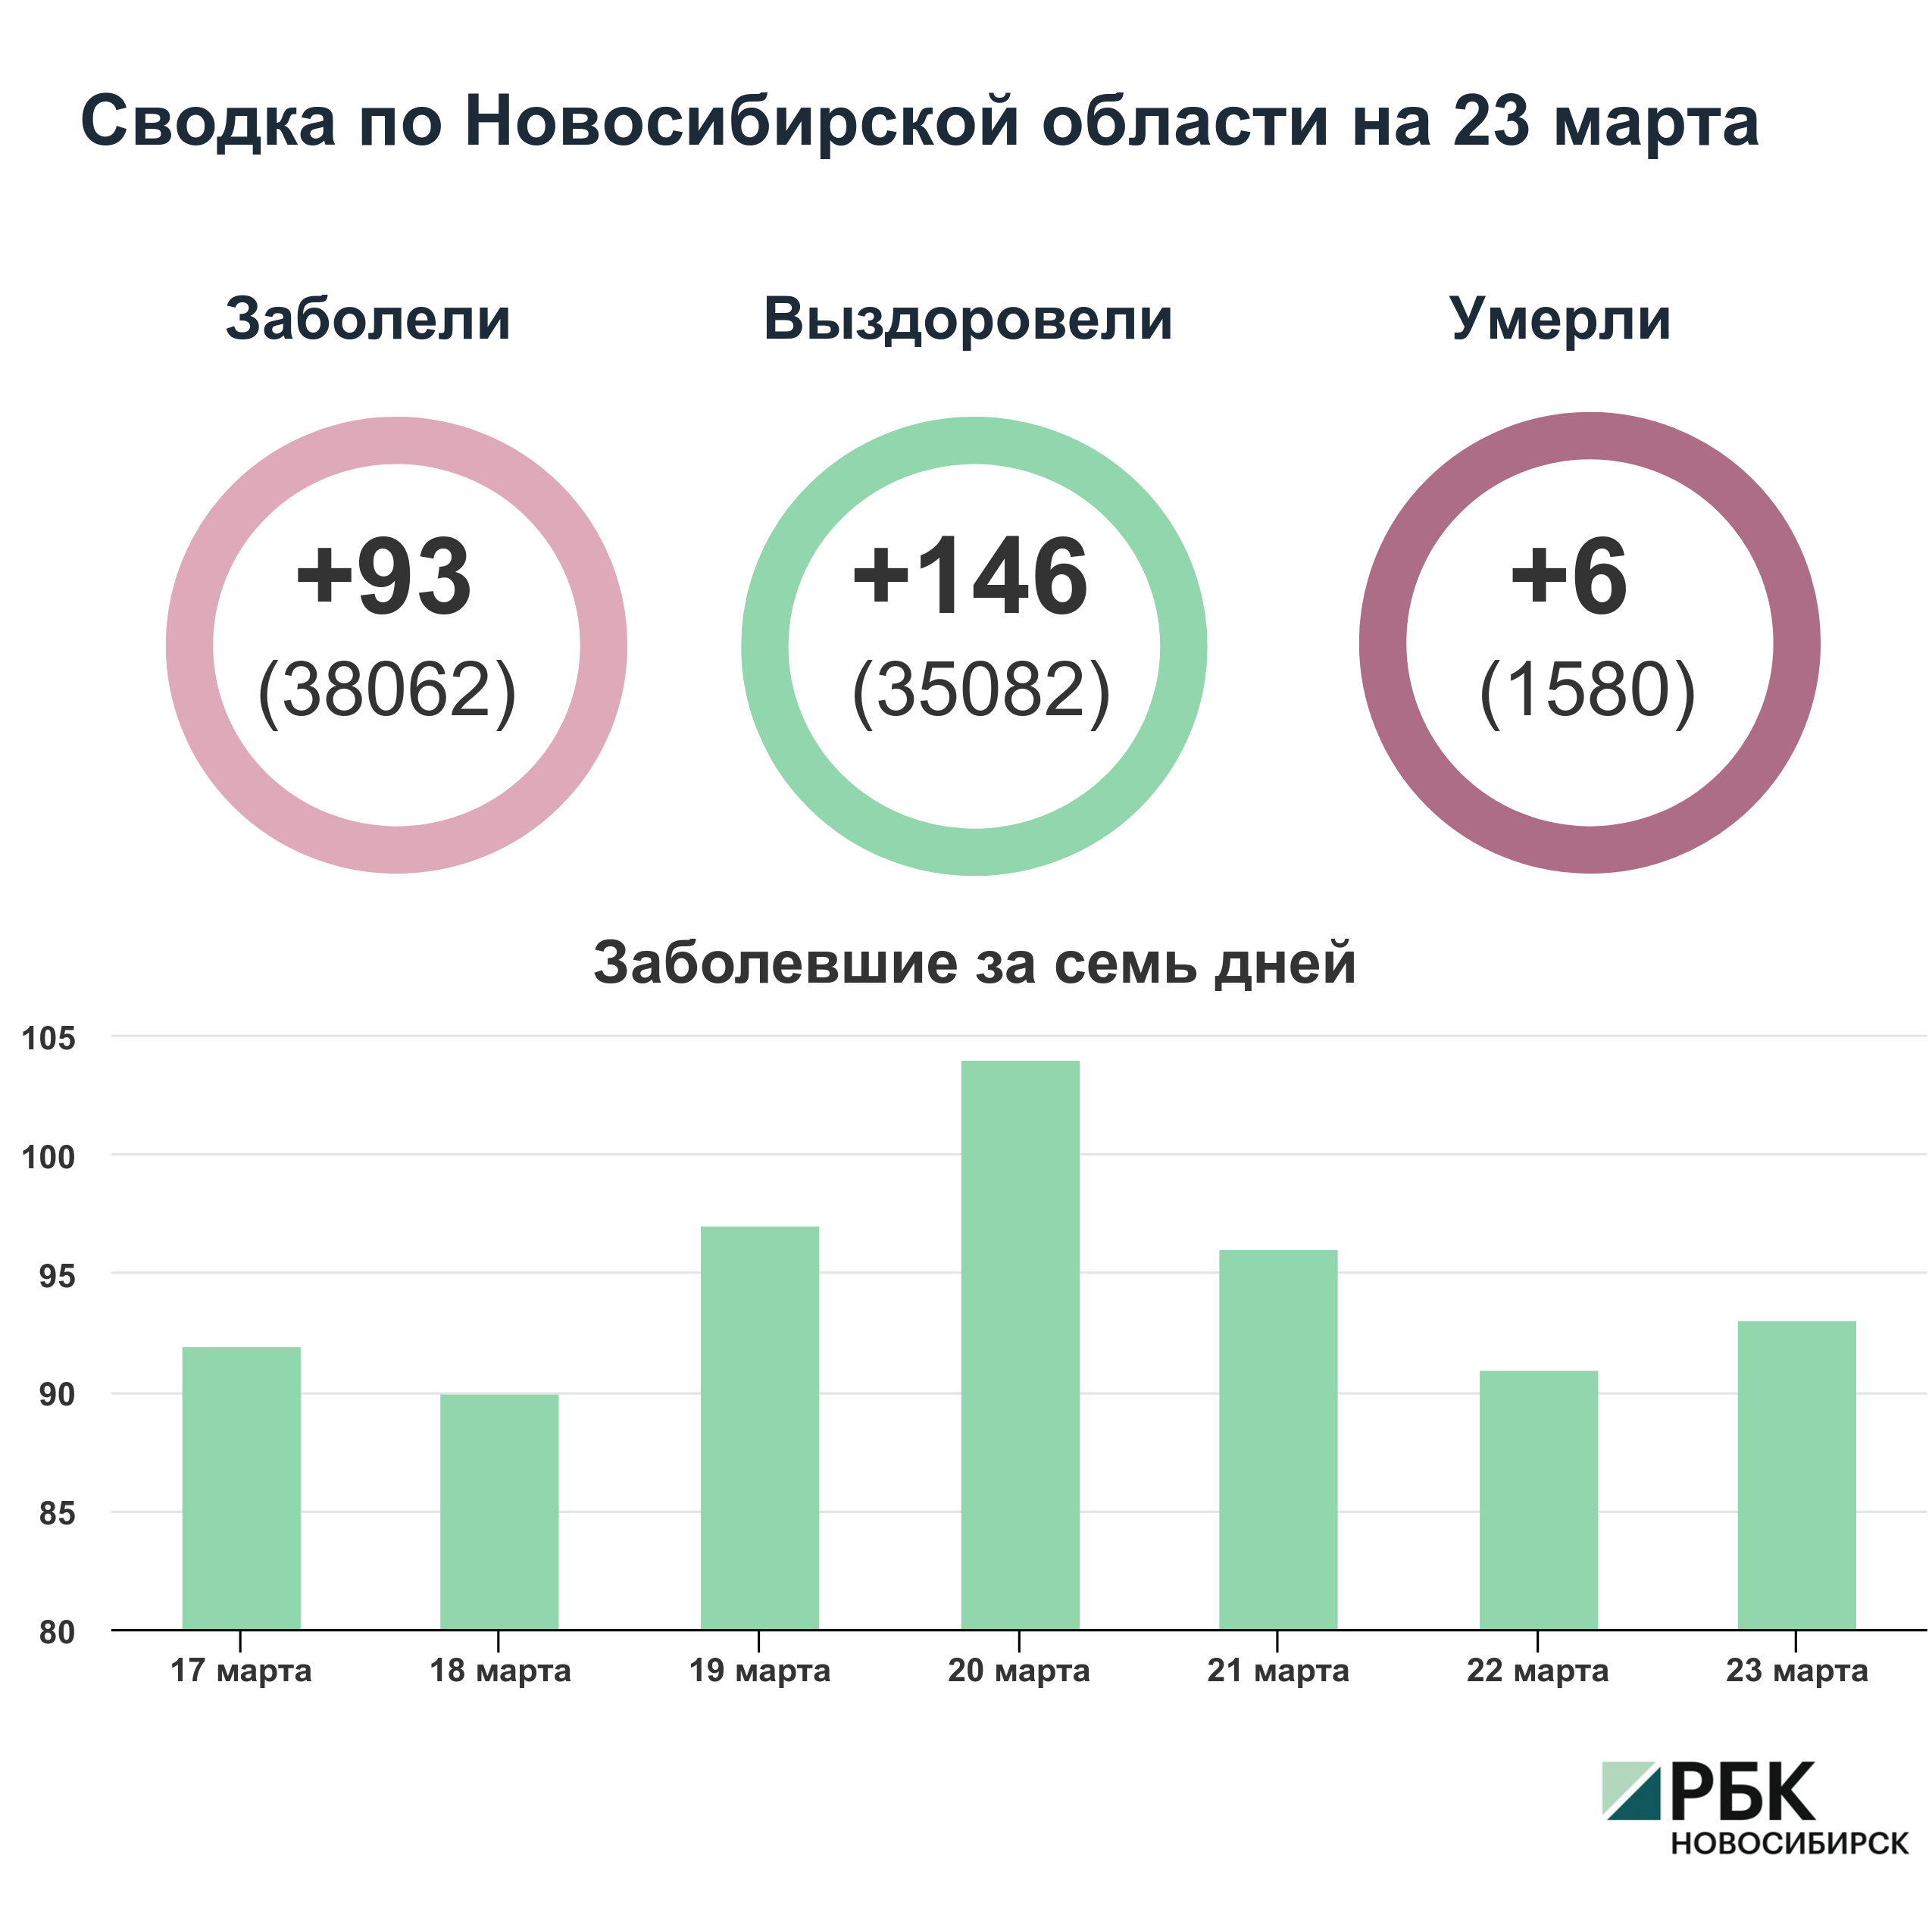 Коронавирус в Новосибирске: сводка на 23 марта